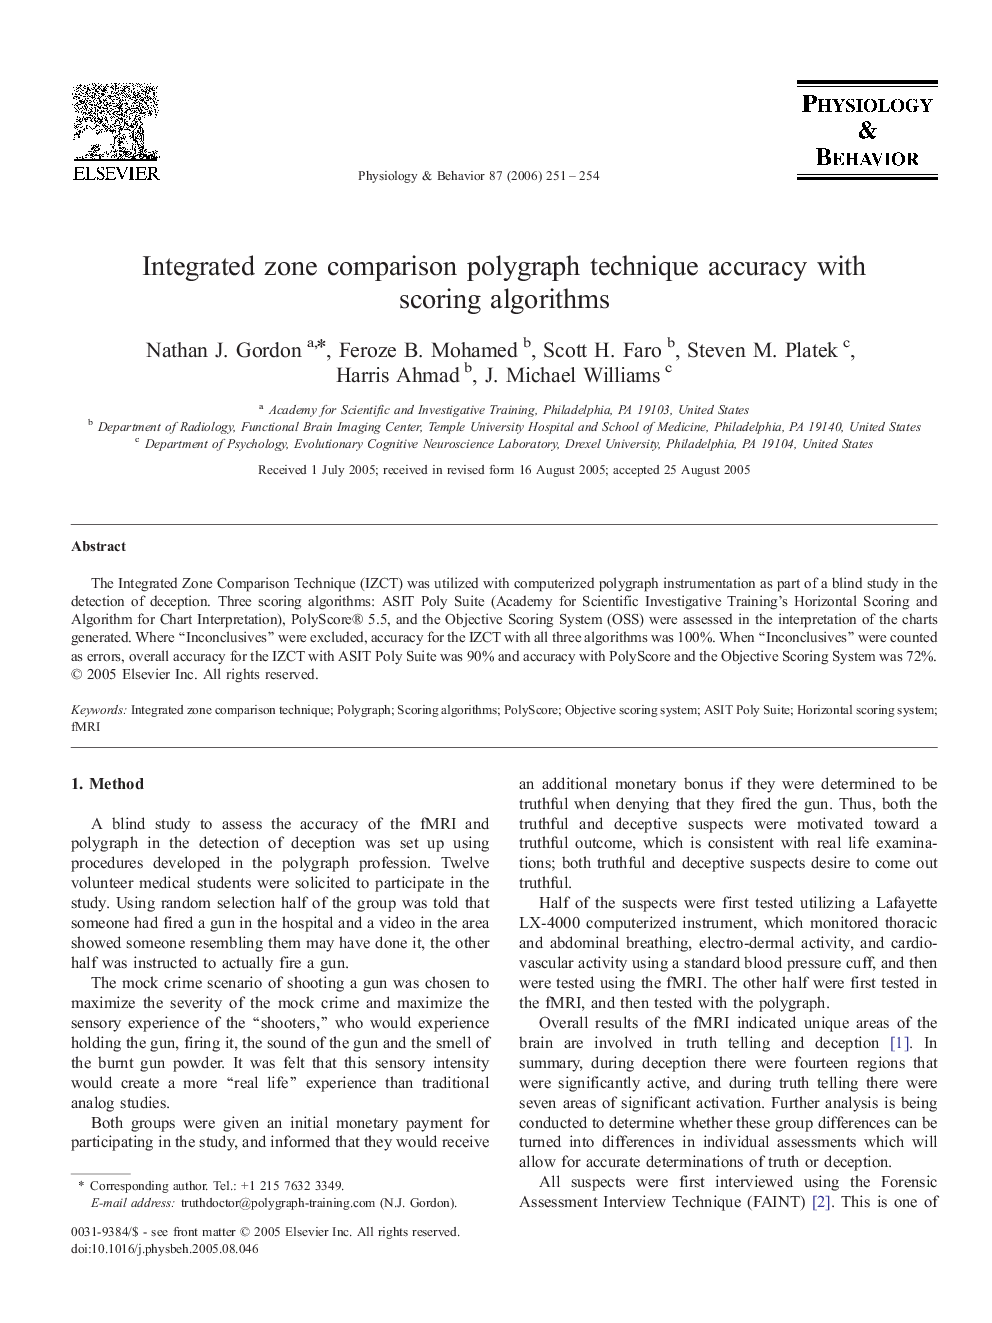 Integrated zone comparison polygraph technique accuracy with scoring algorithms